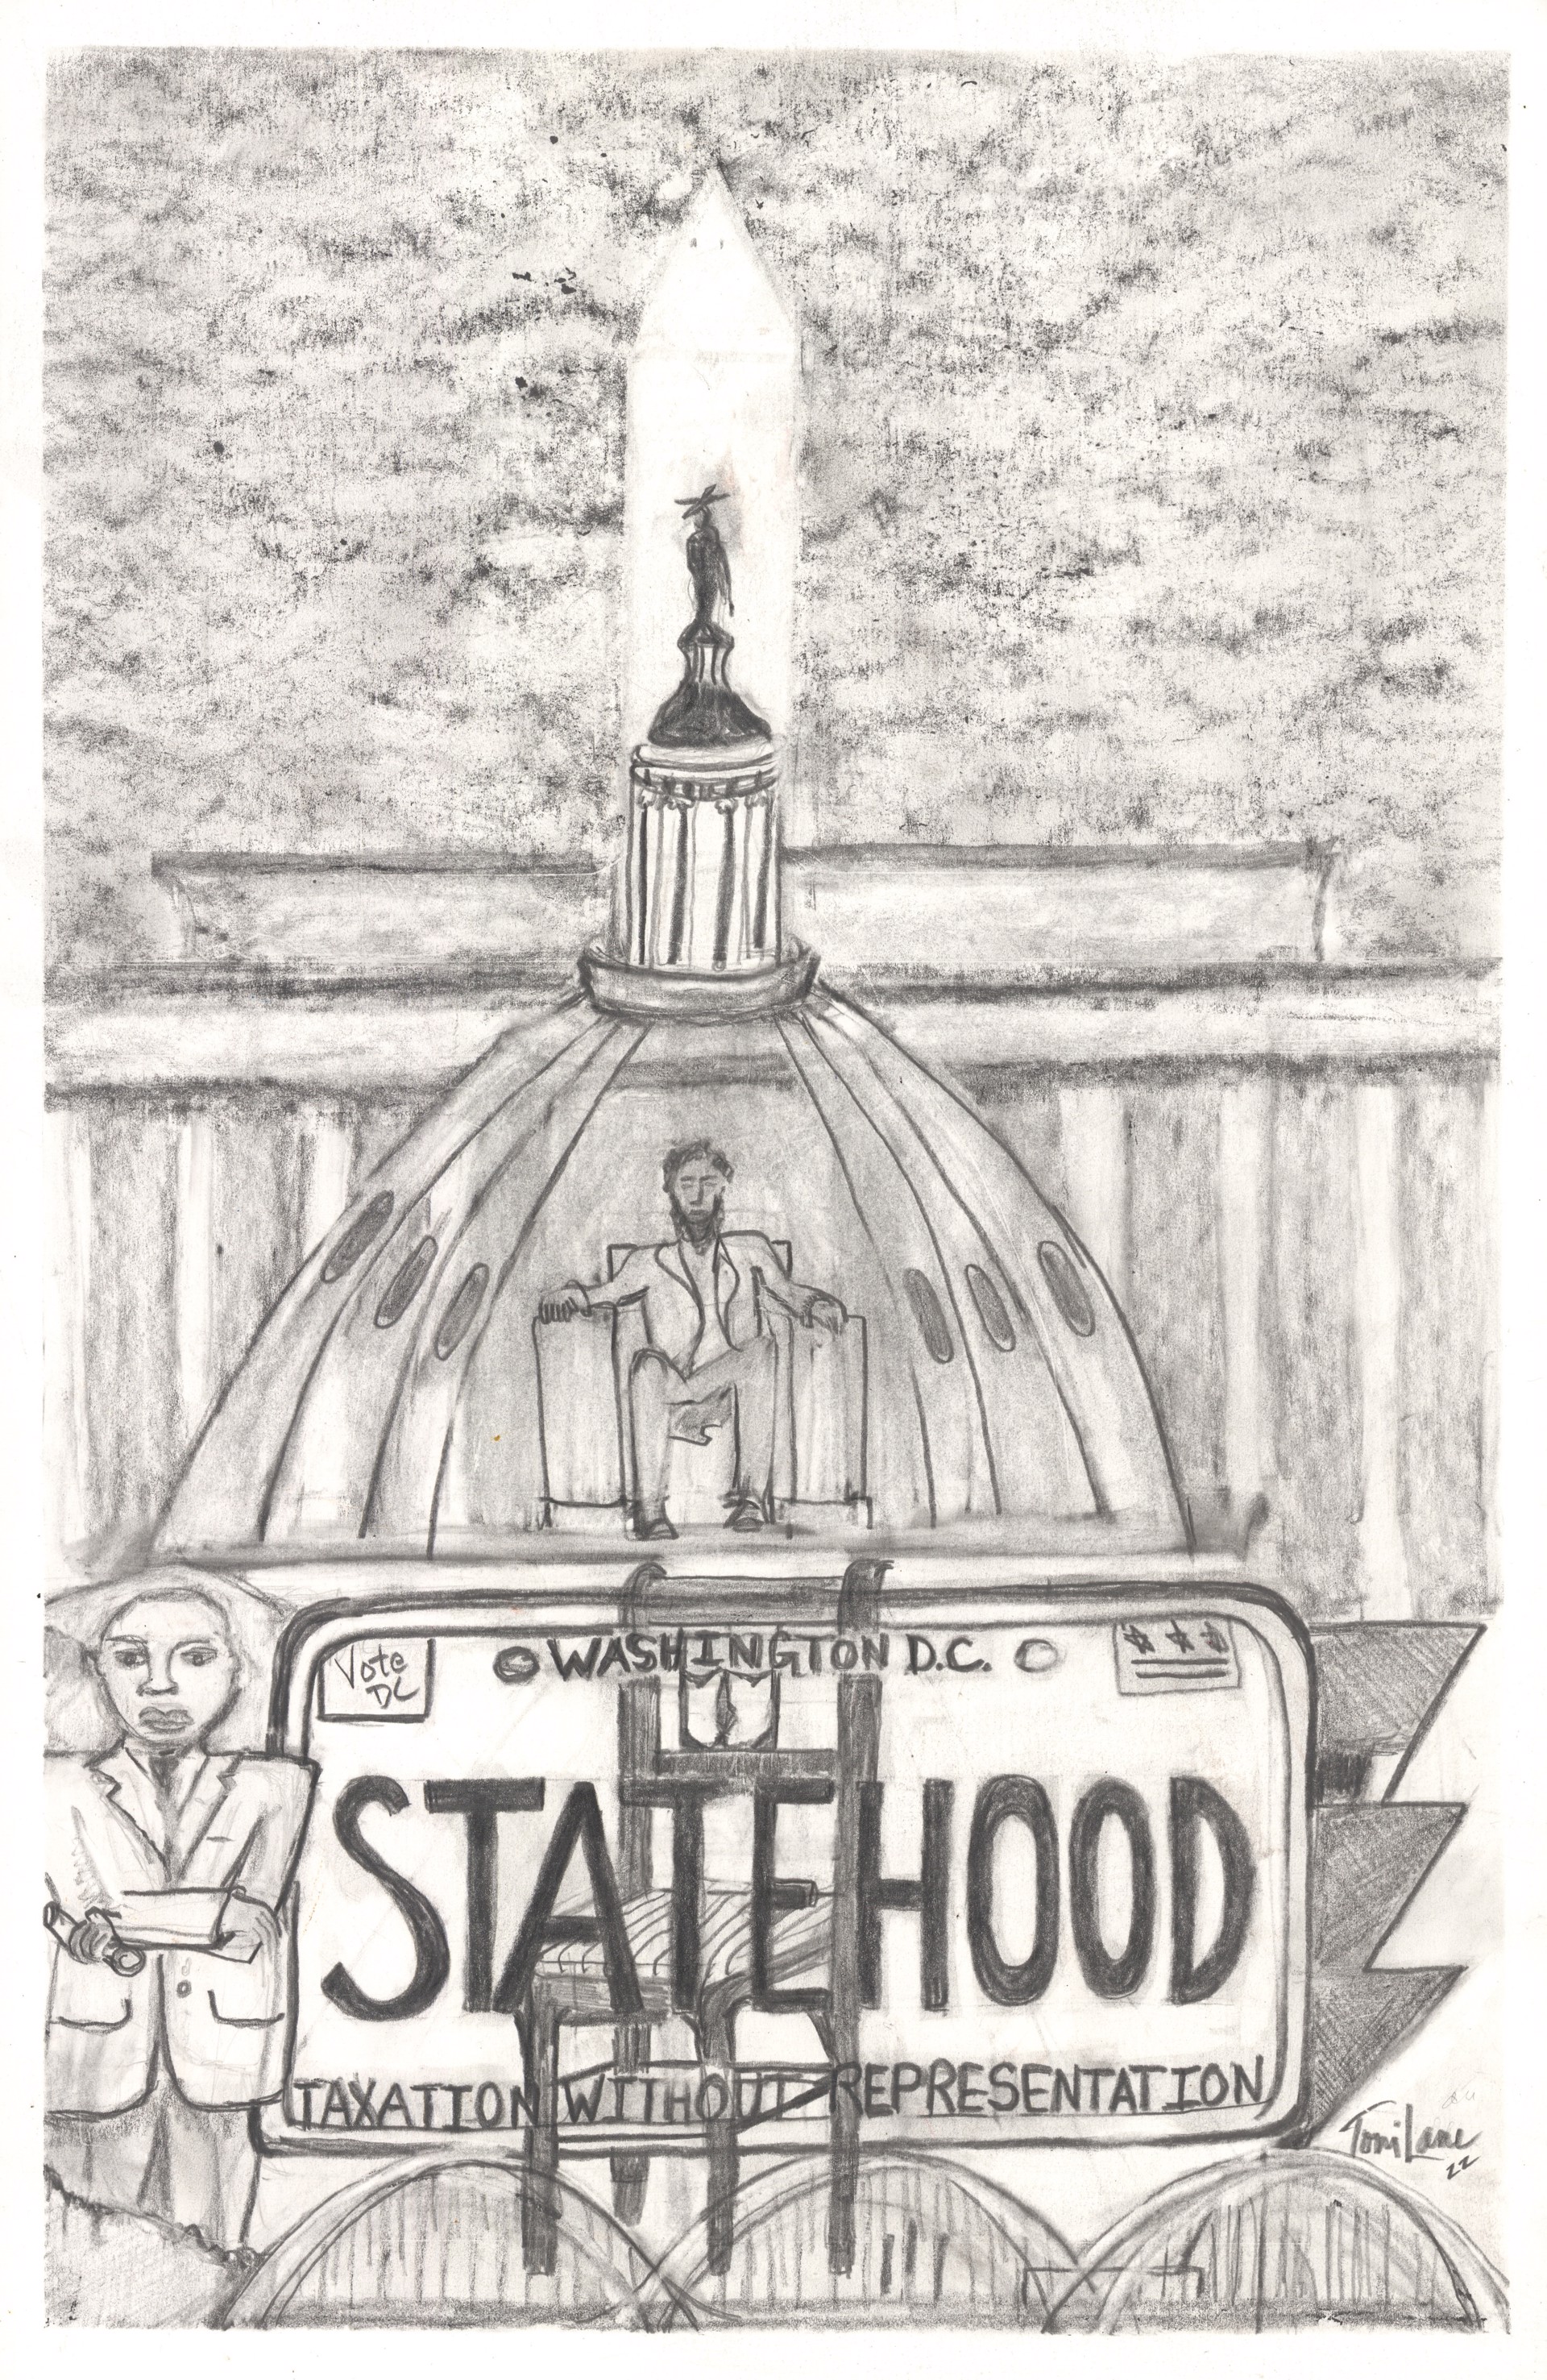 Statehood by Toni Lane